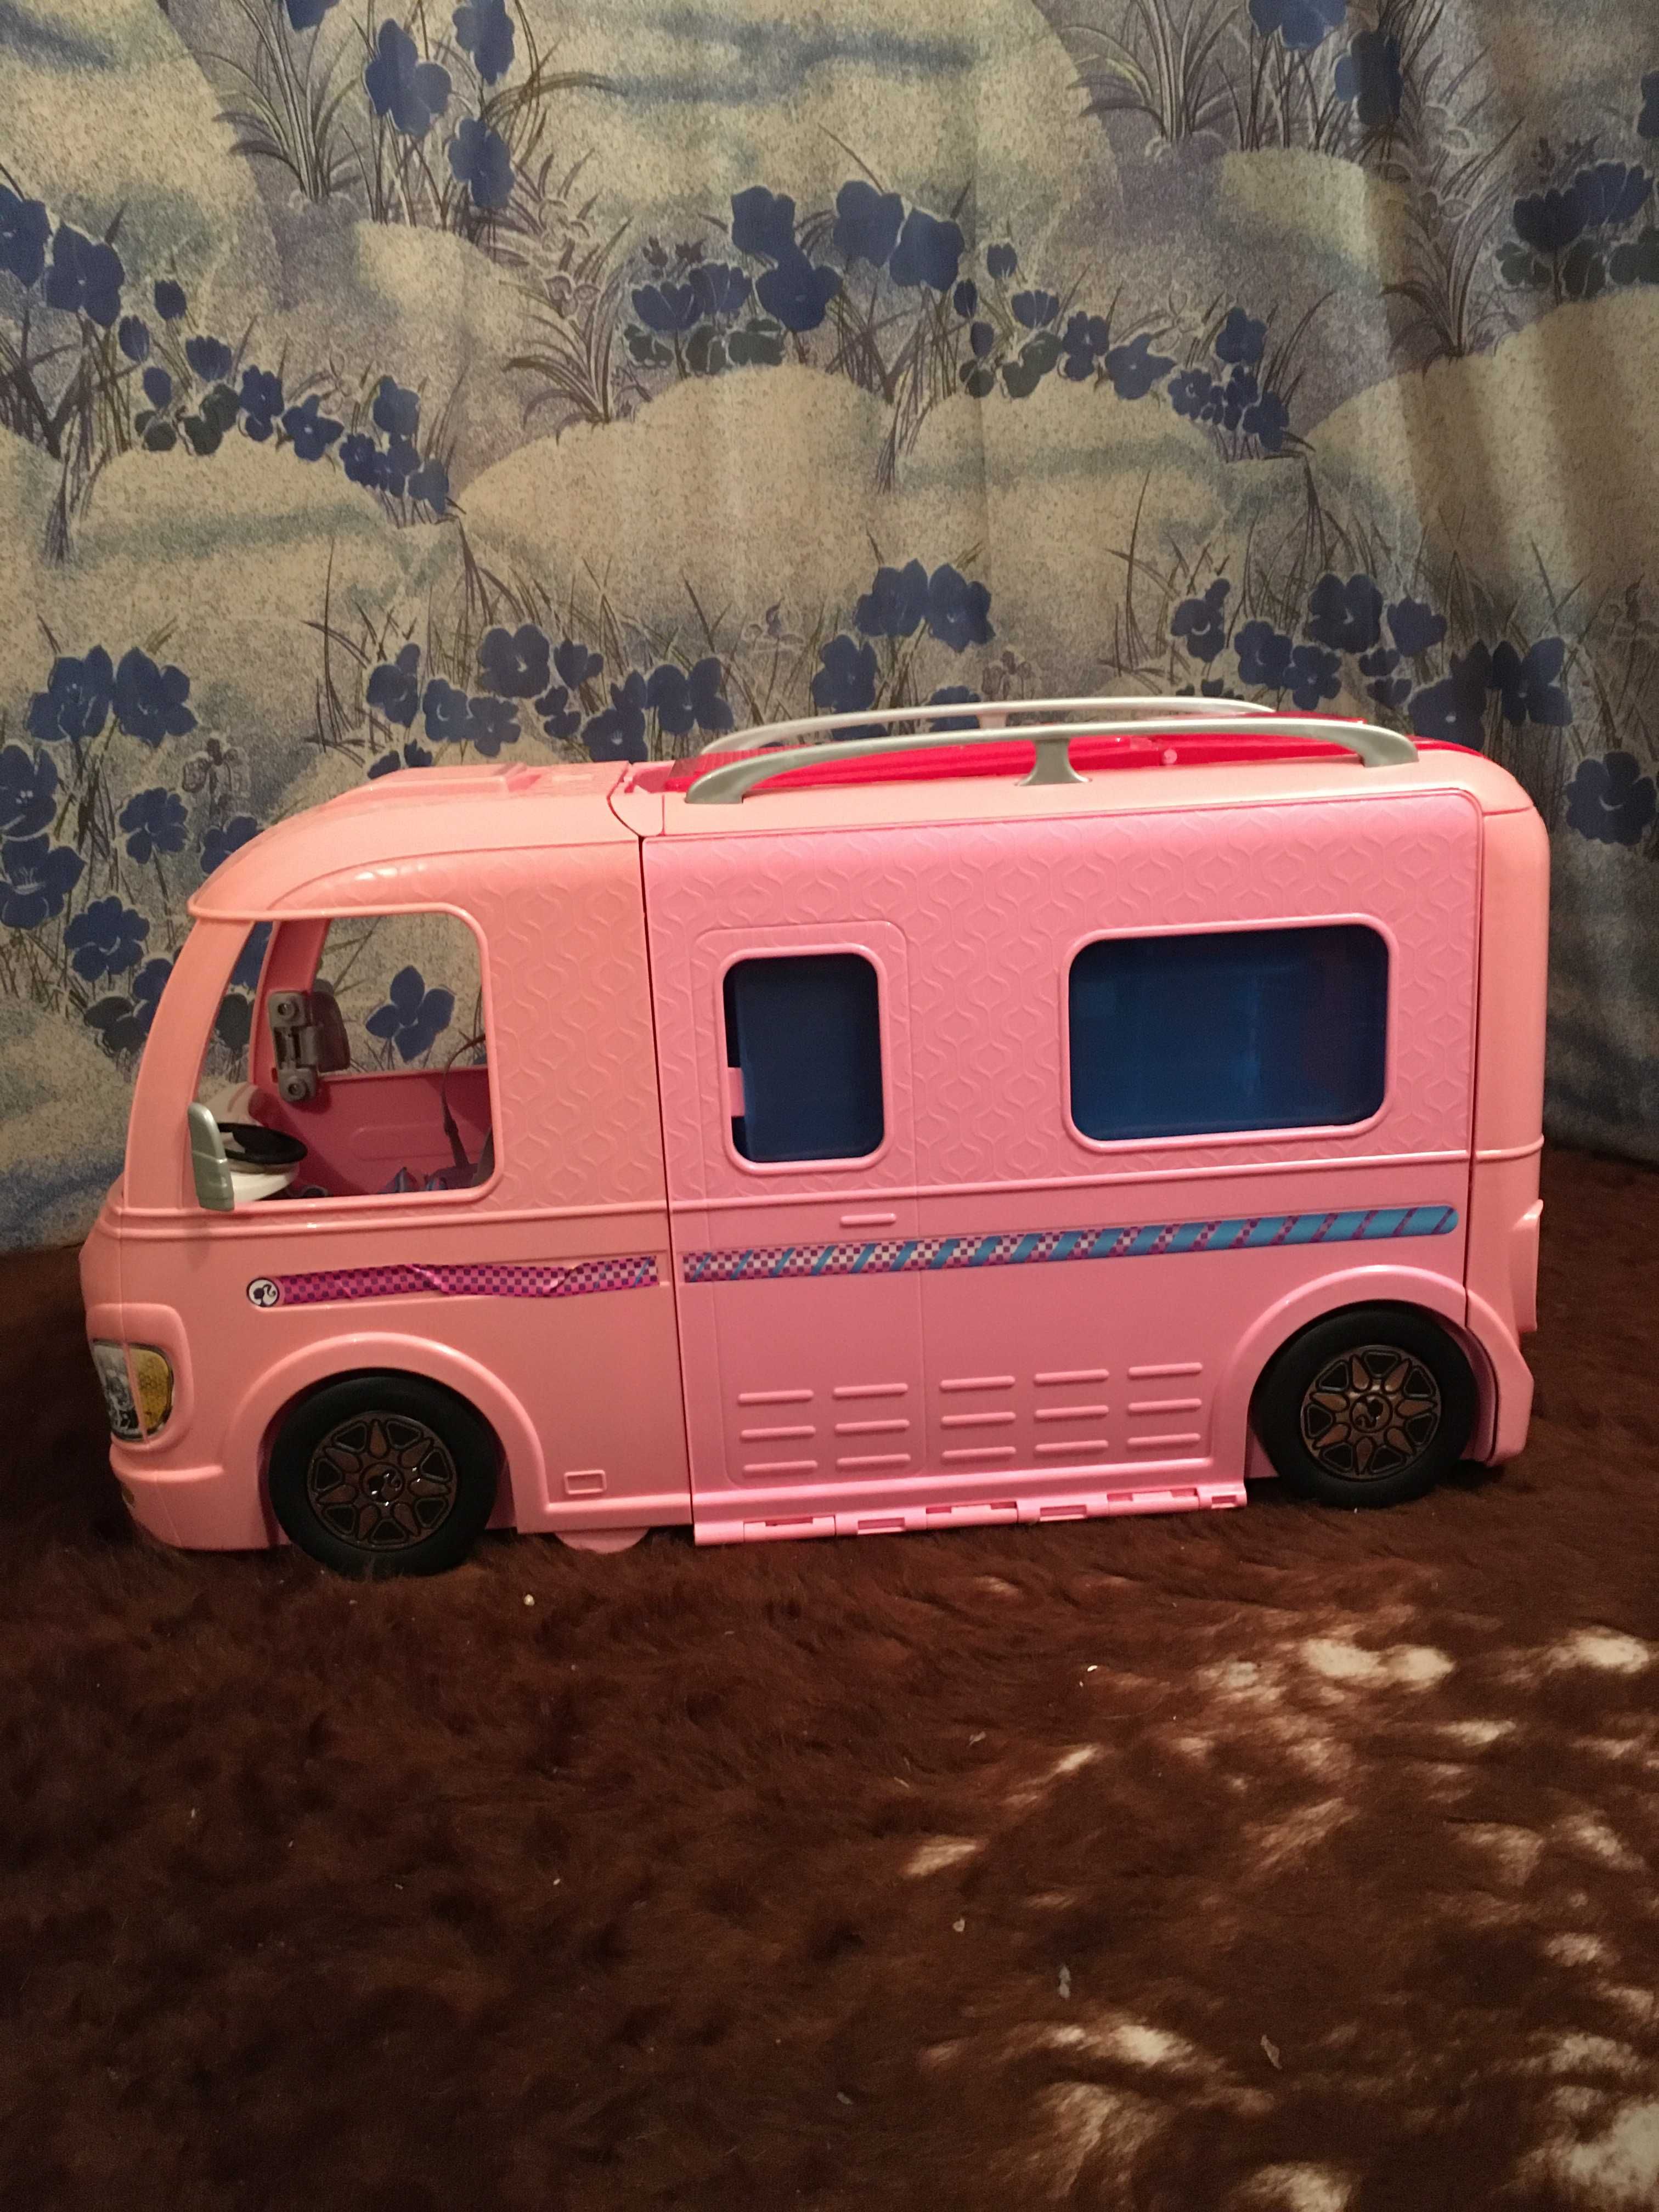 Auto caravana da Barbie